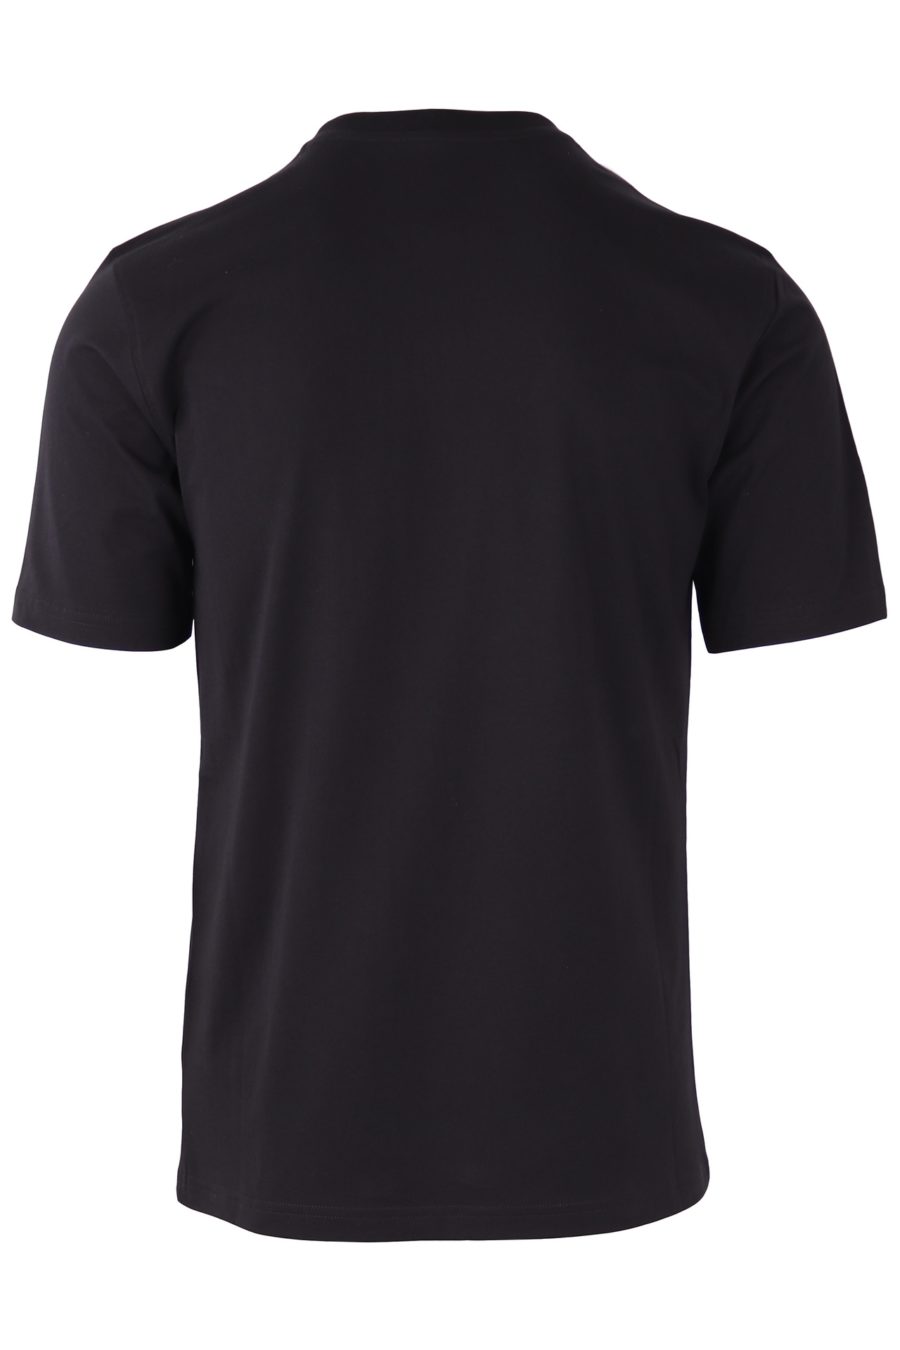 Camiseta interior Balmain negra con logo blanco y negro - 83c7af8d4754888c951a29d8cfd9bc0afdc356c5 1